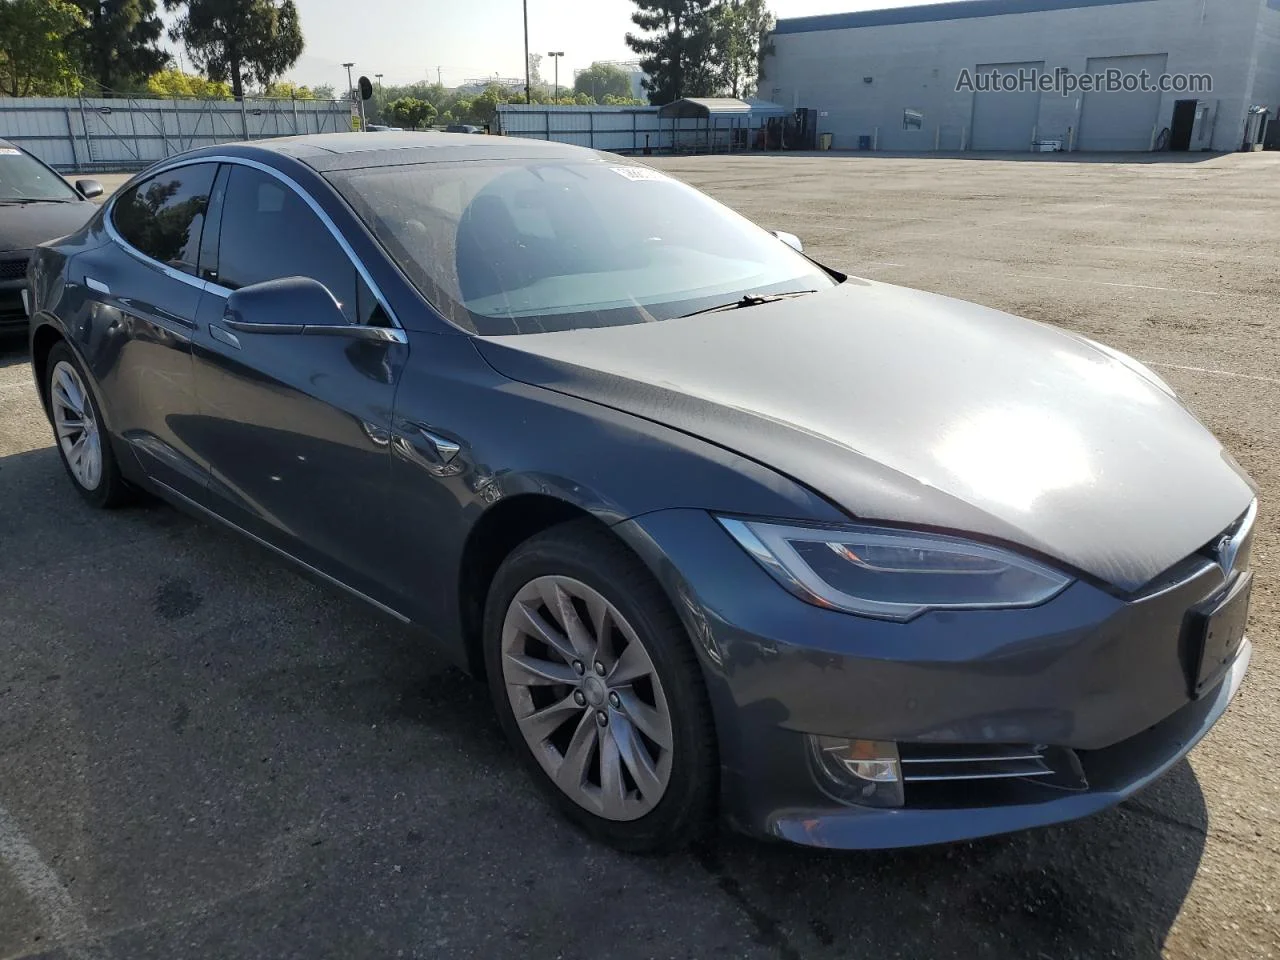 2018 Tesla Model S  Gray vin: 5YJSA1E26JF261898